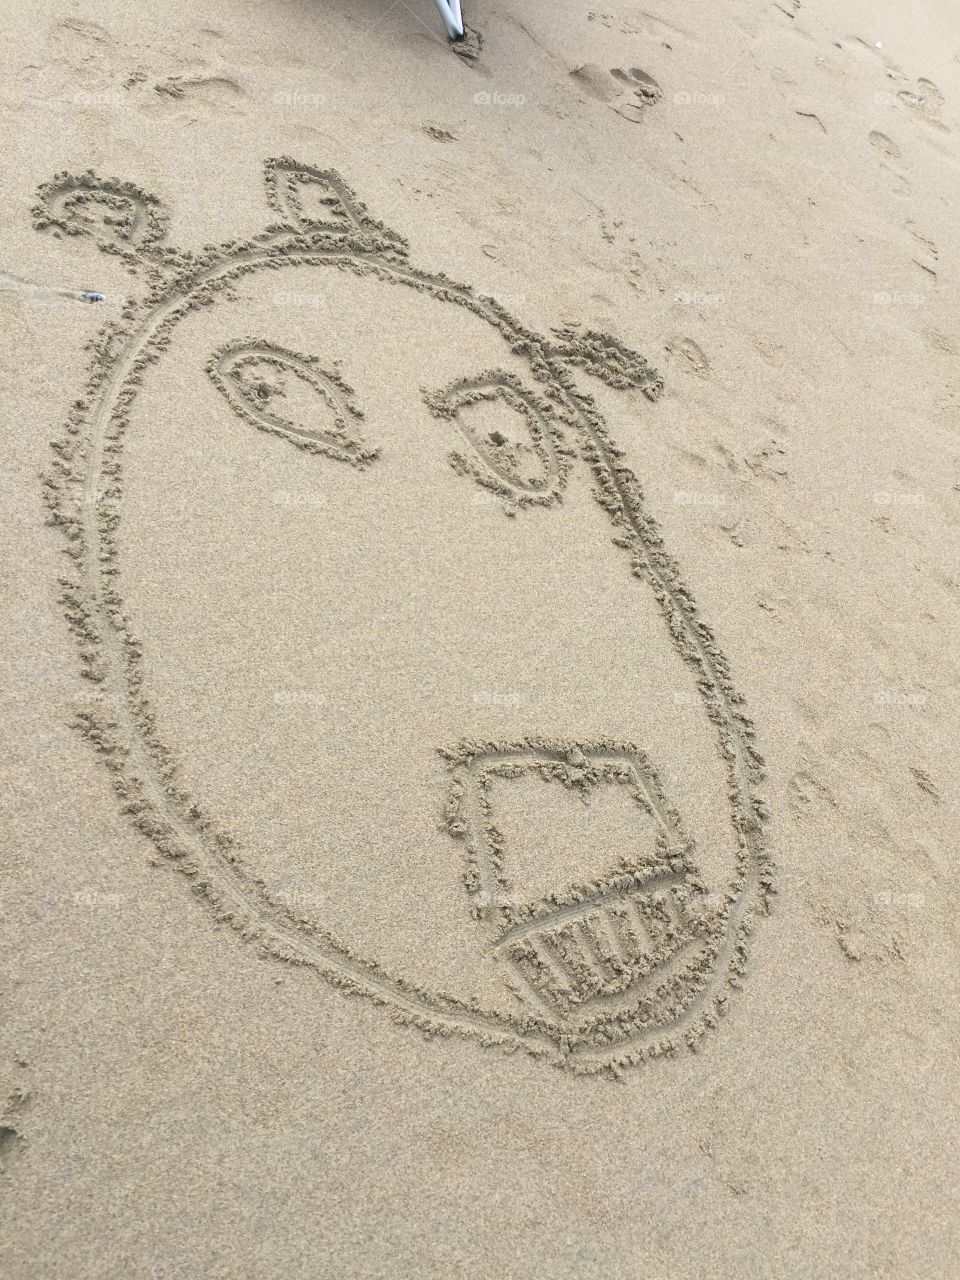 Sand, Beach, Sandy, Seashore, Footprint